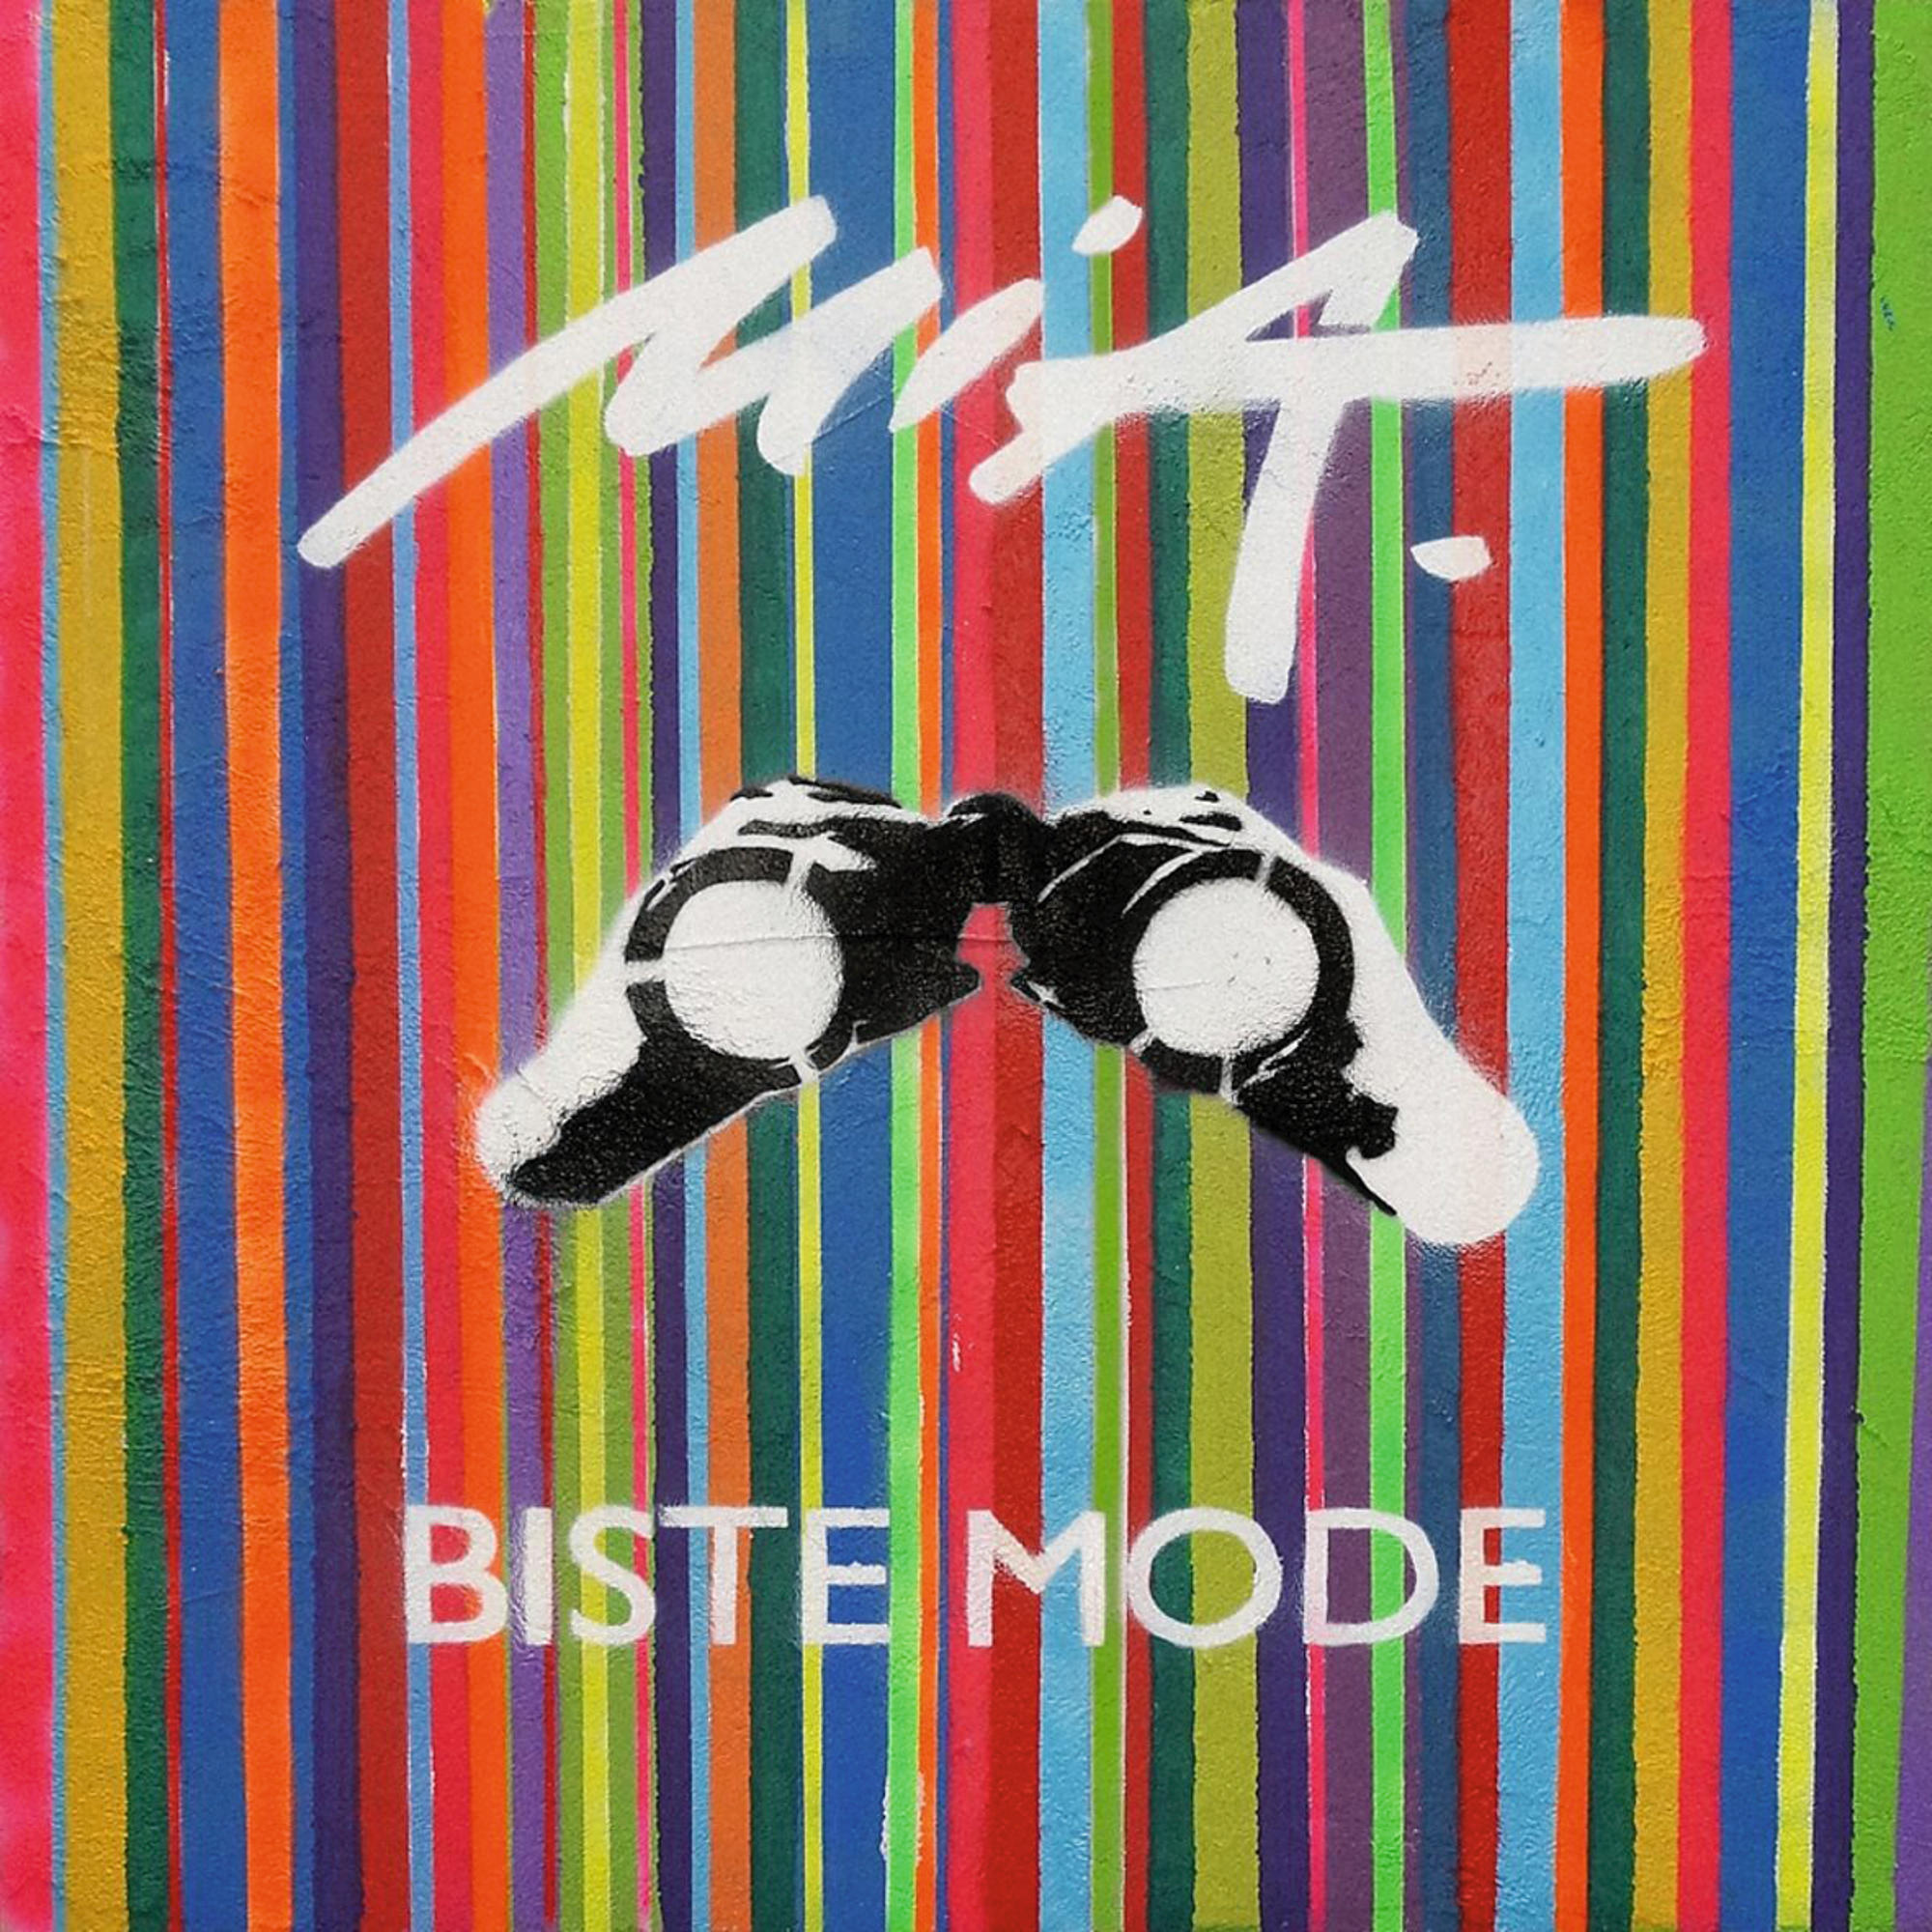 MIA. - Biste - Mode (CD)